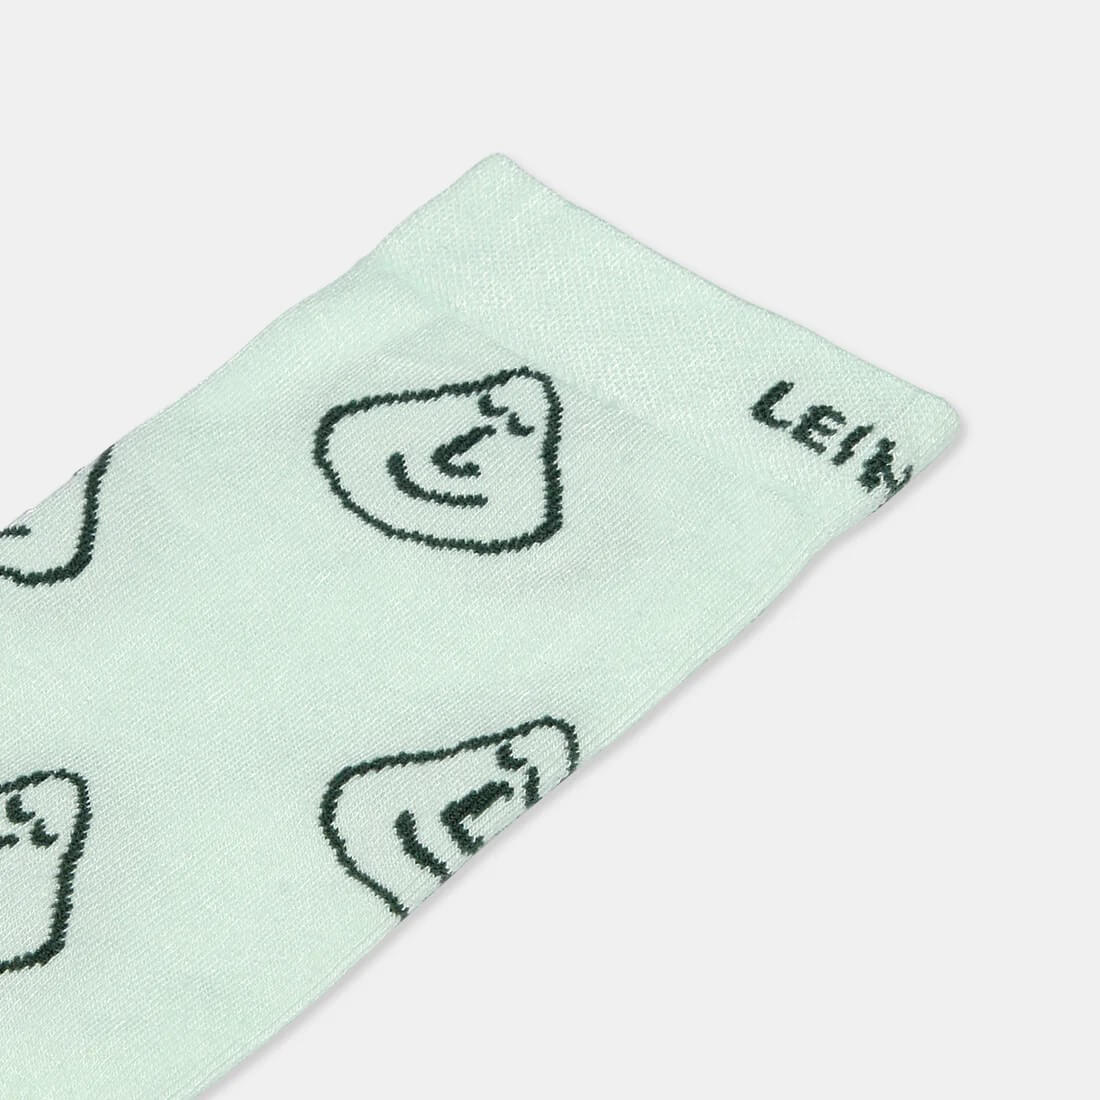 Leiho Socks Smiley Bamboo Socks - We're Mint To Be